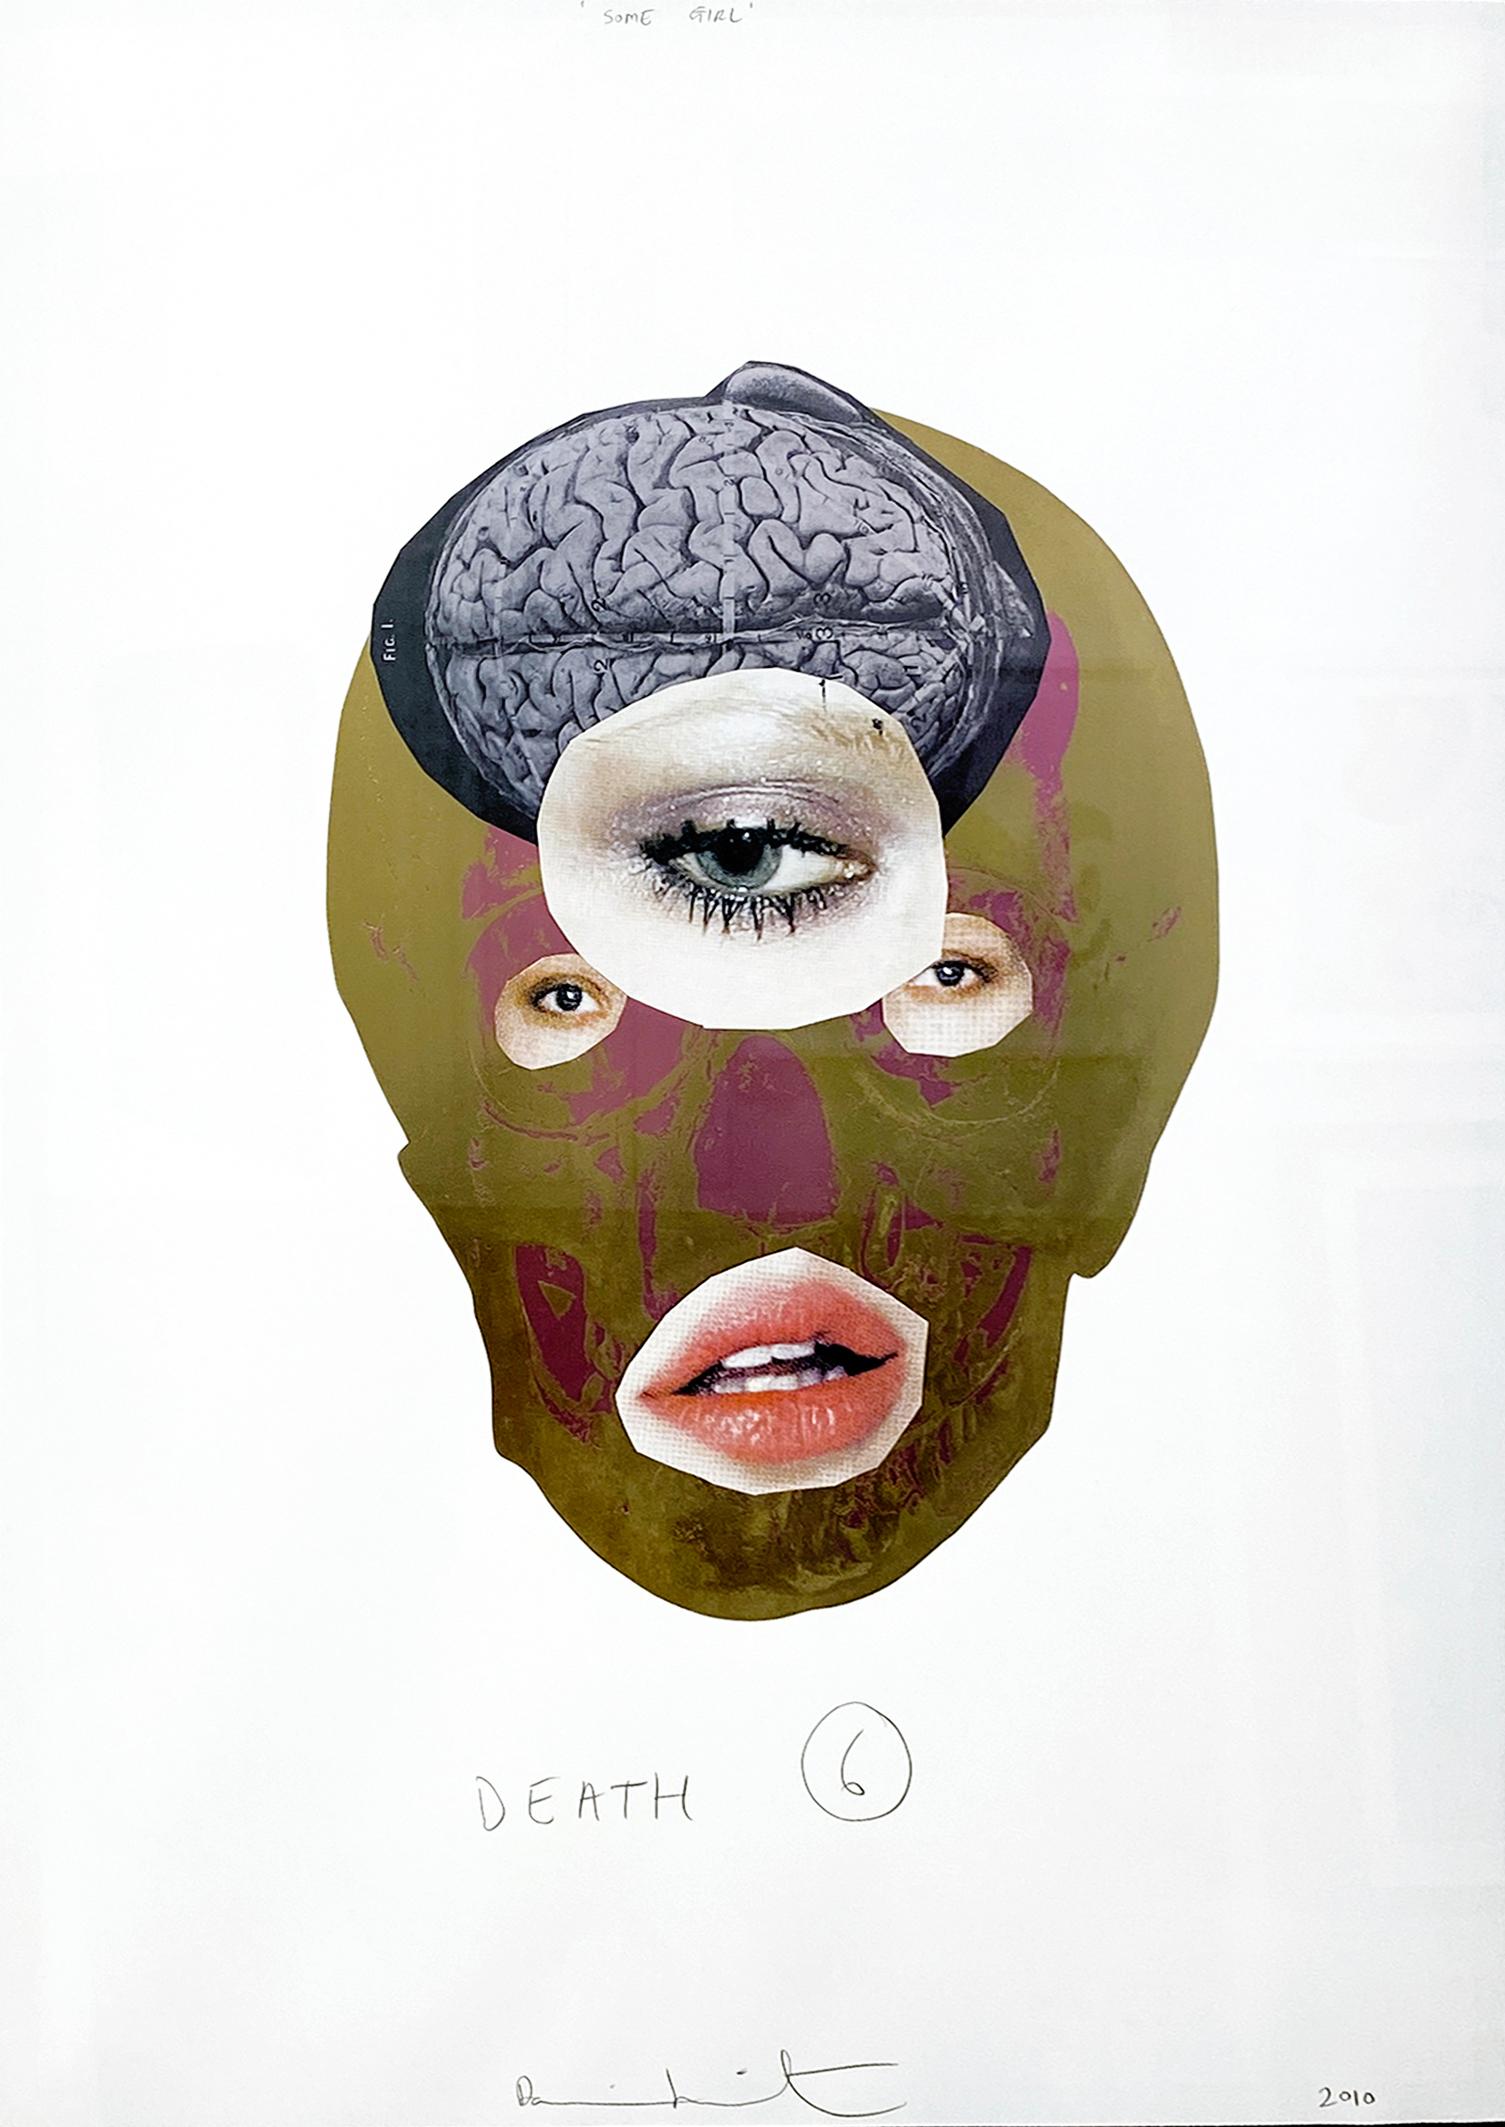 Some Girl Death (une morte féminine) - 6 - Mixed Media Art de Damien Hirst